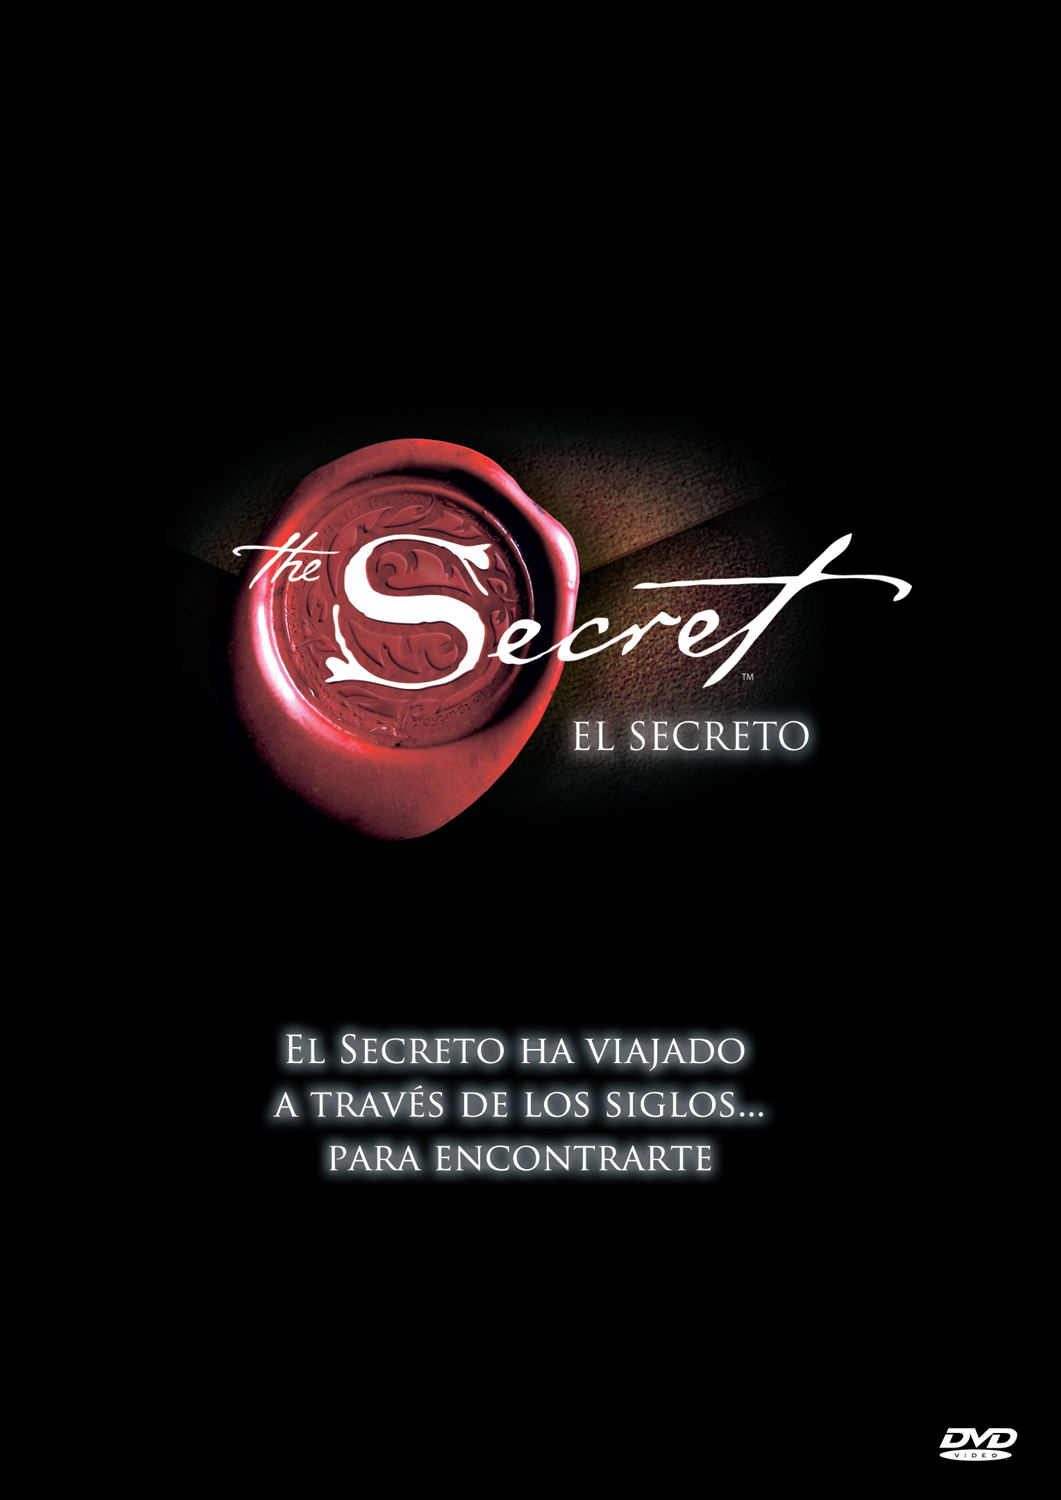 El Secreto - Beyond Words Publishing